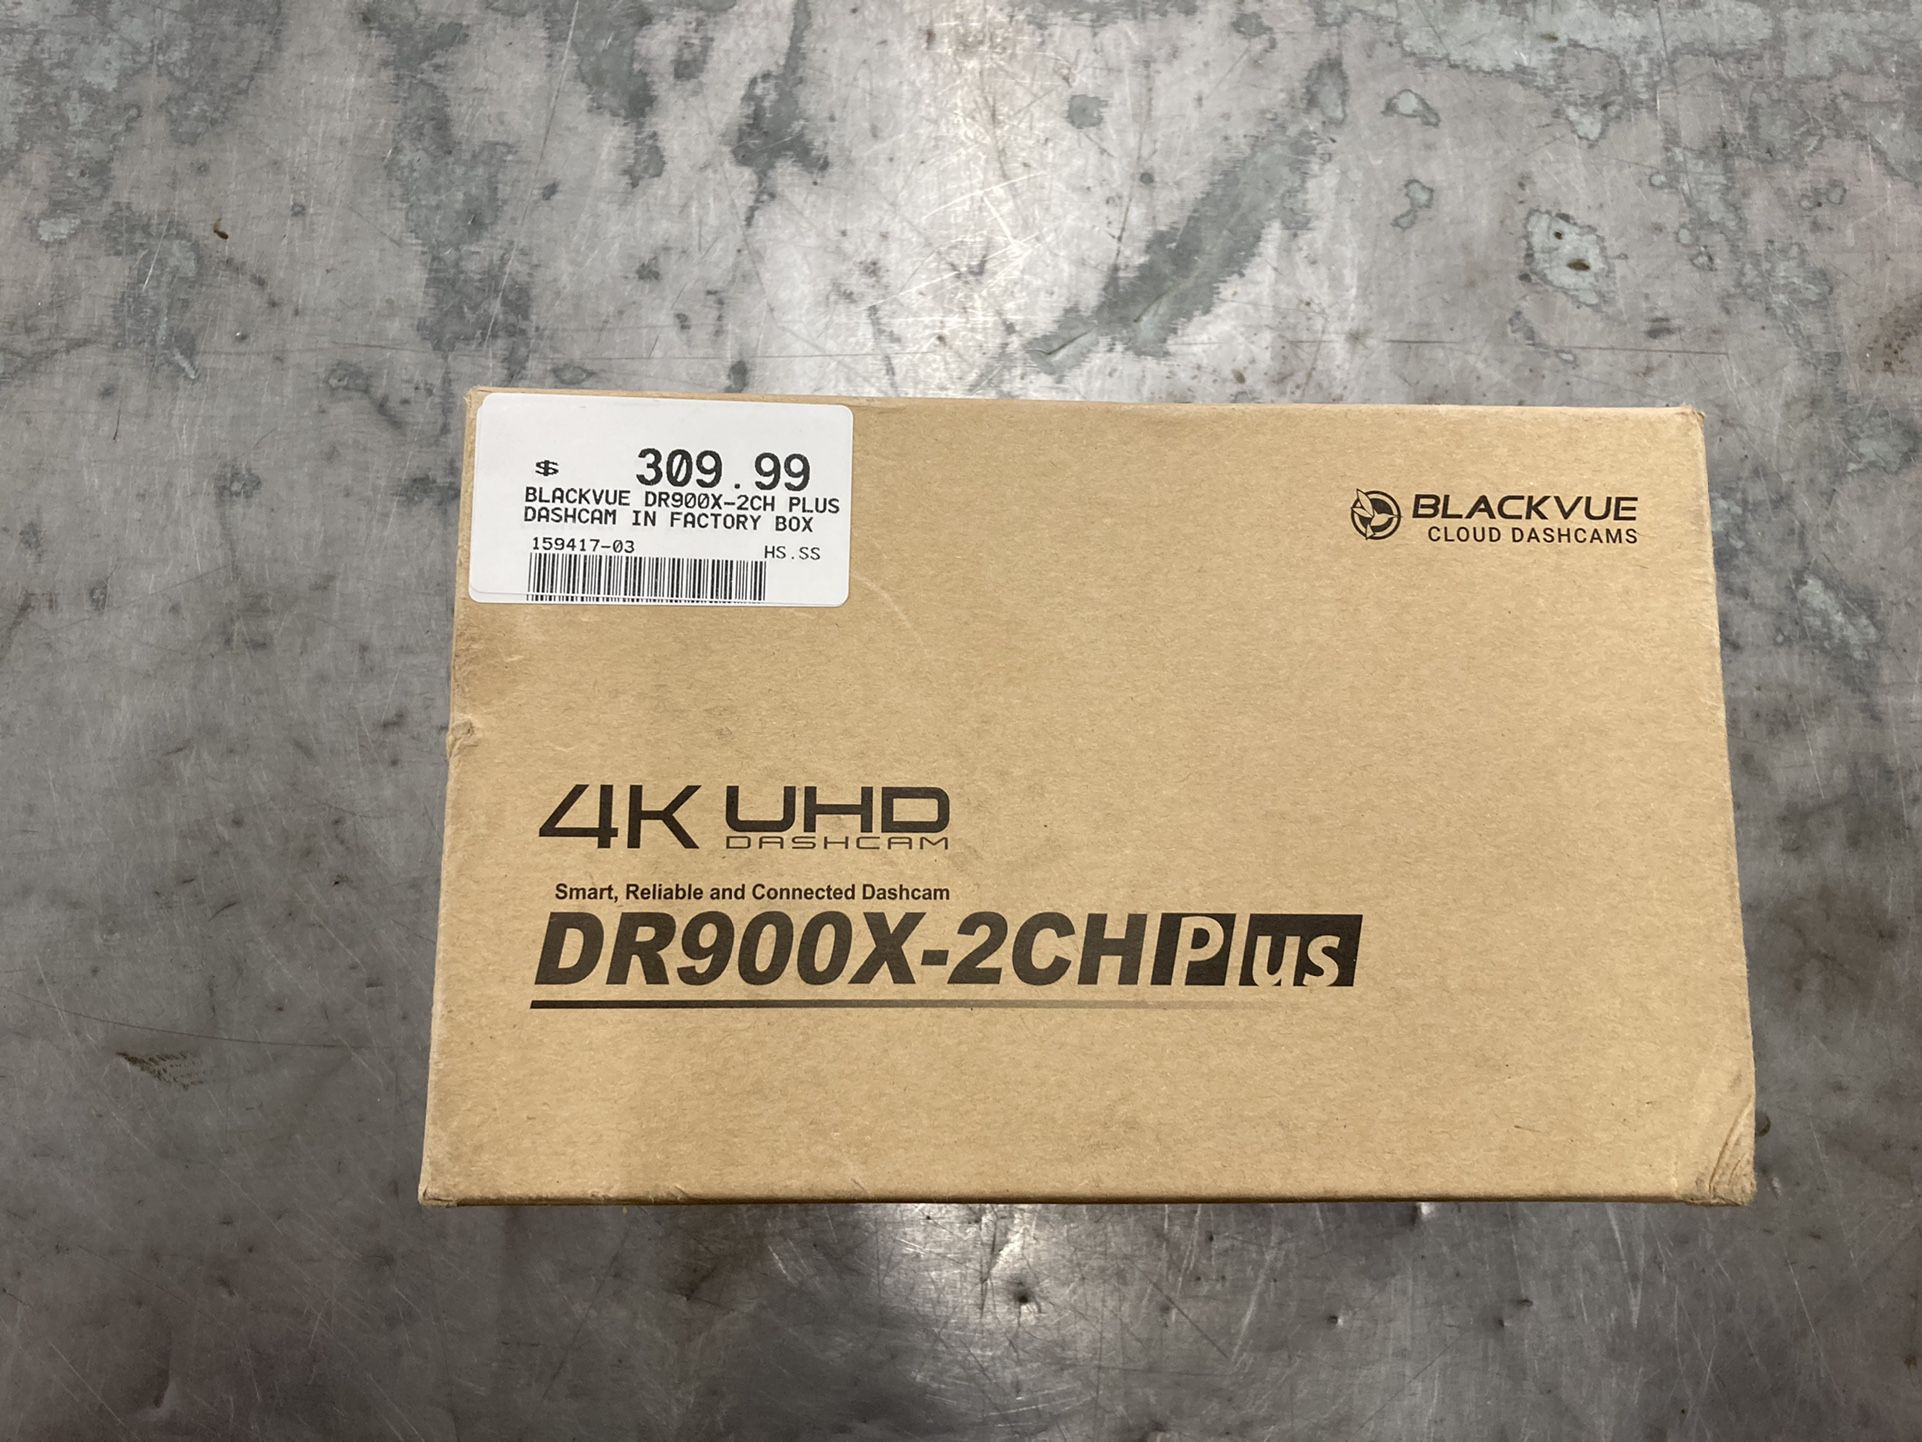 BlackVue DR900X-2CH Plus Dashcam